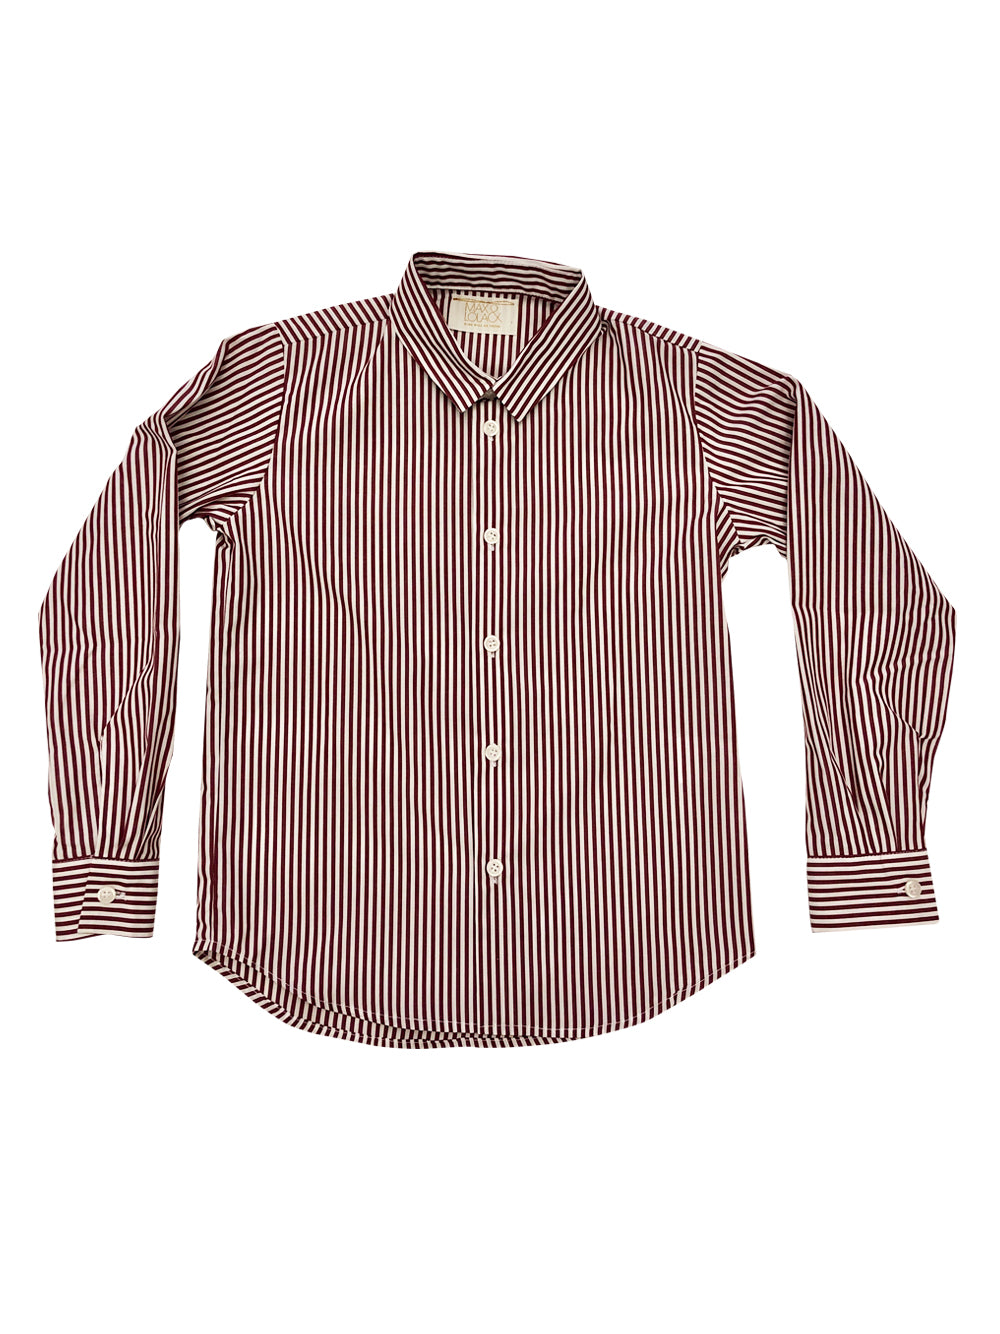 Chemlibis Burgundy Striped Shirt